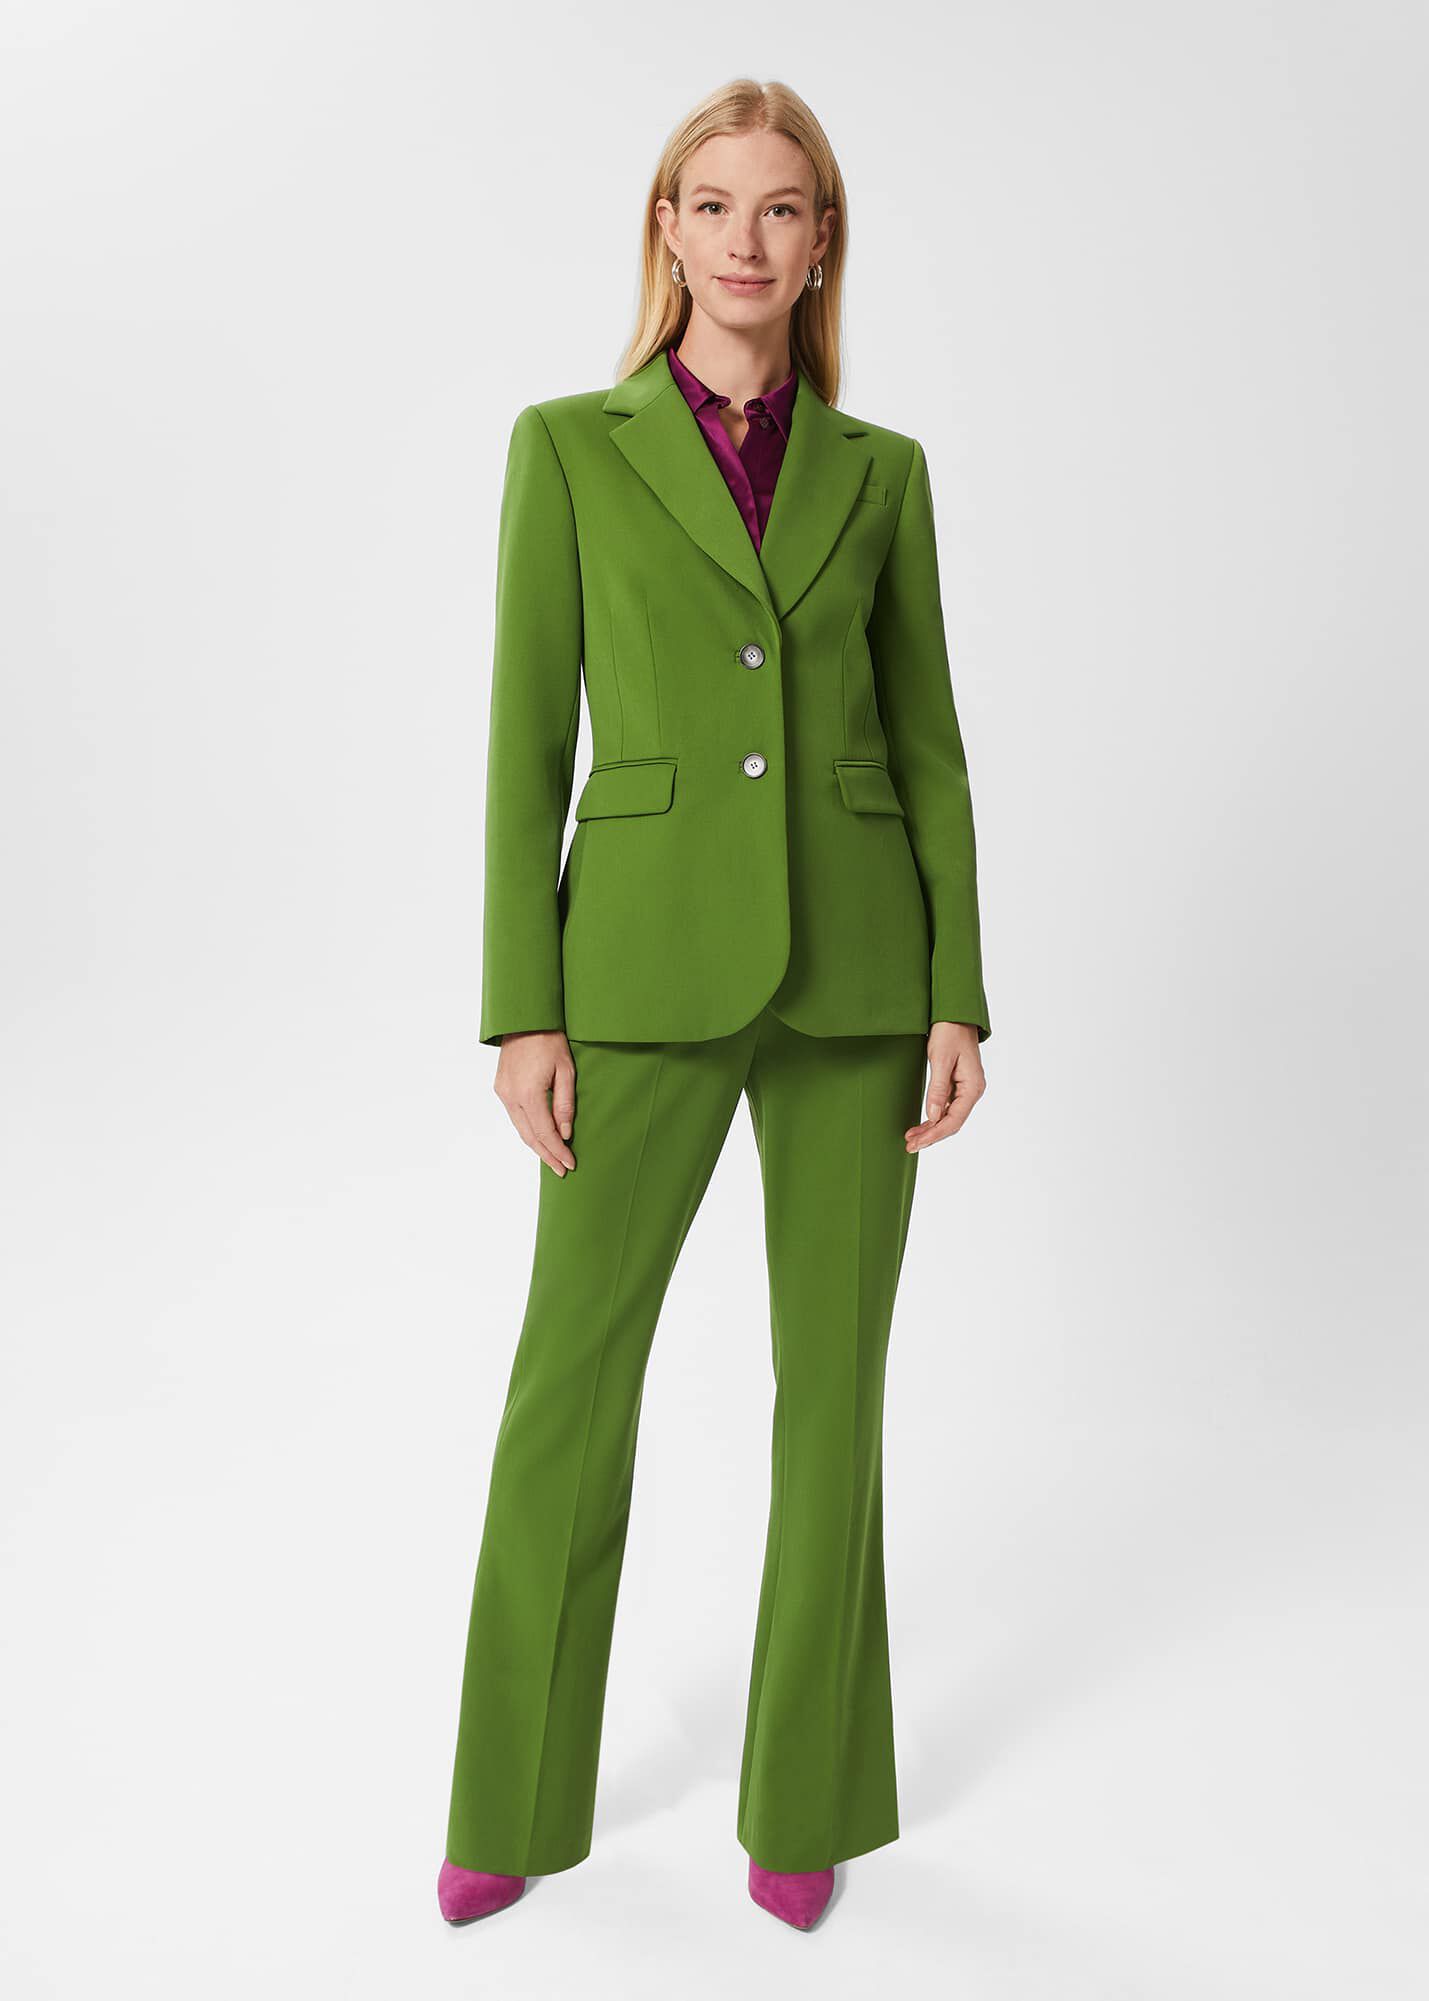 Suits for Women  Ladies Suits  Warehouse UK